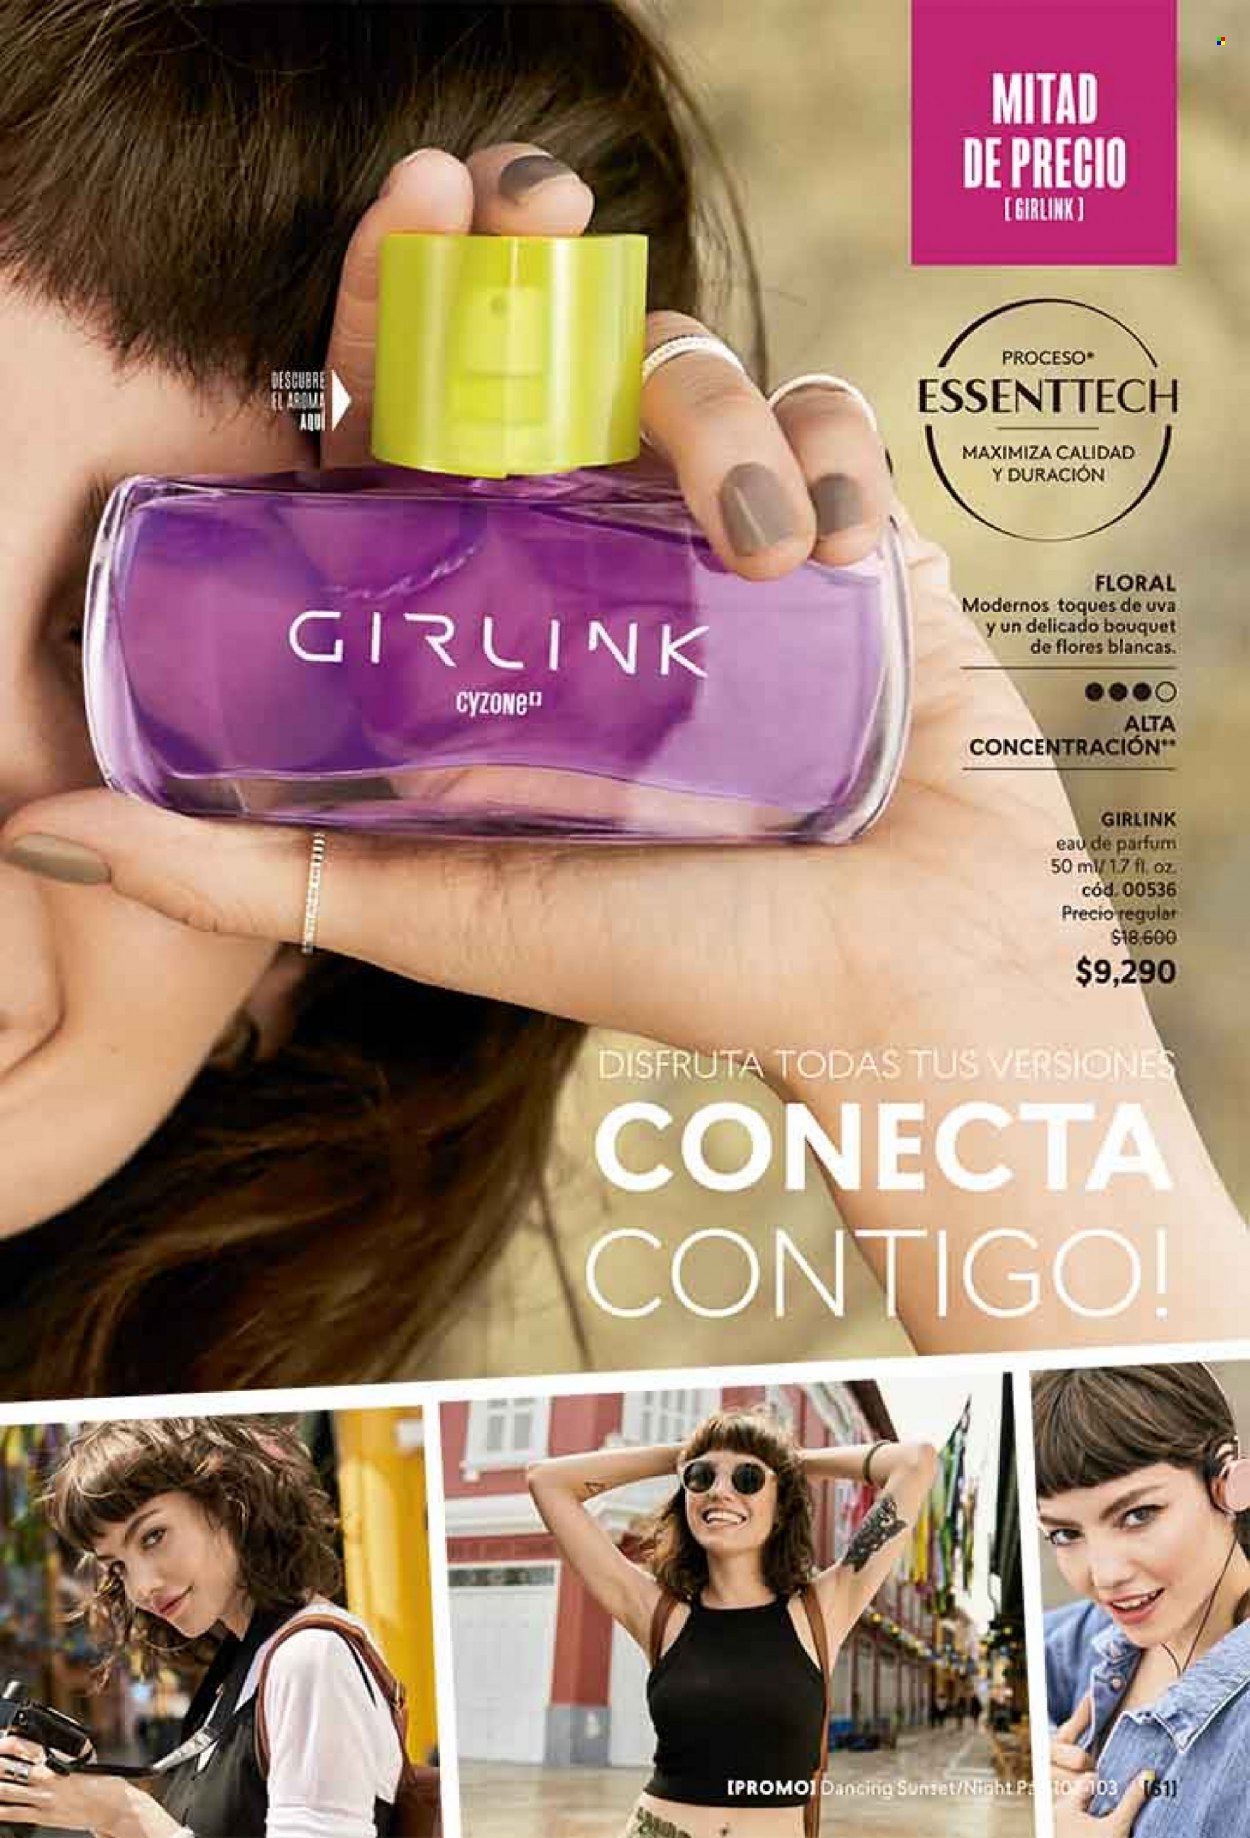 Catálogo Cyzone - Ventas - perfume. Página 61.